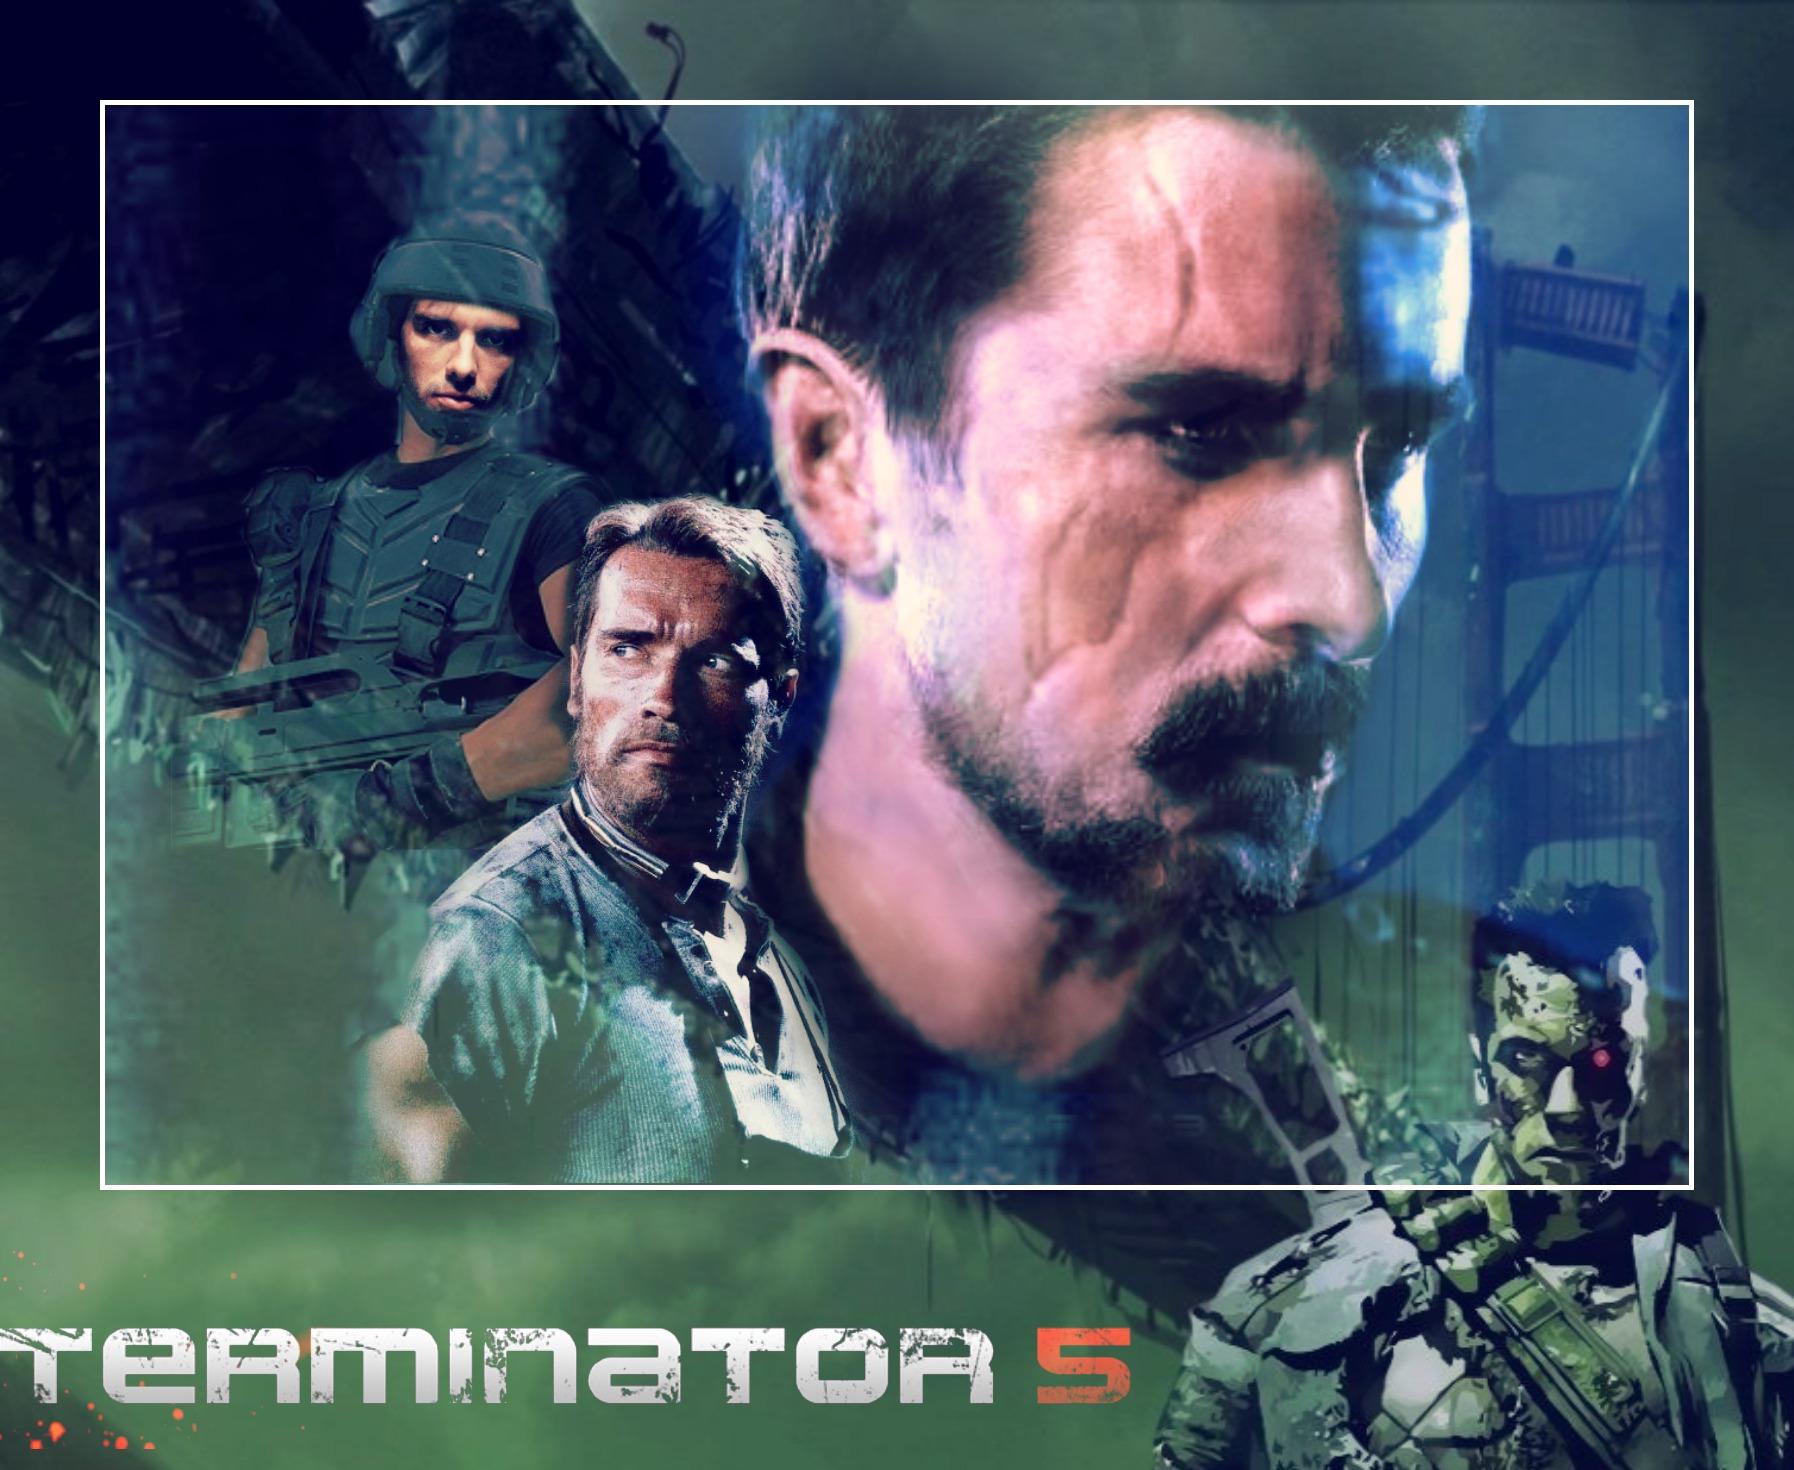 Terminator AU - Art by Kaylah
Keywords: terminator_art;terminator_wpr